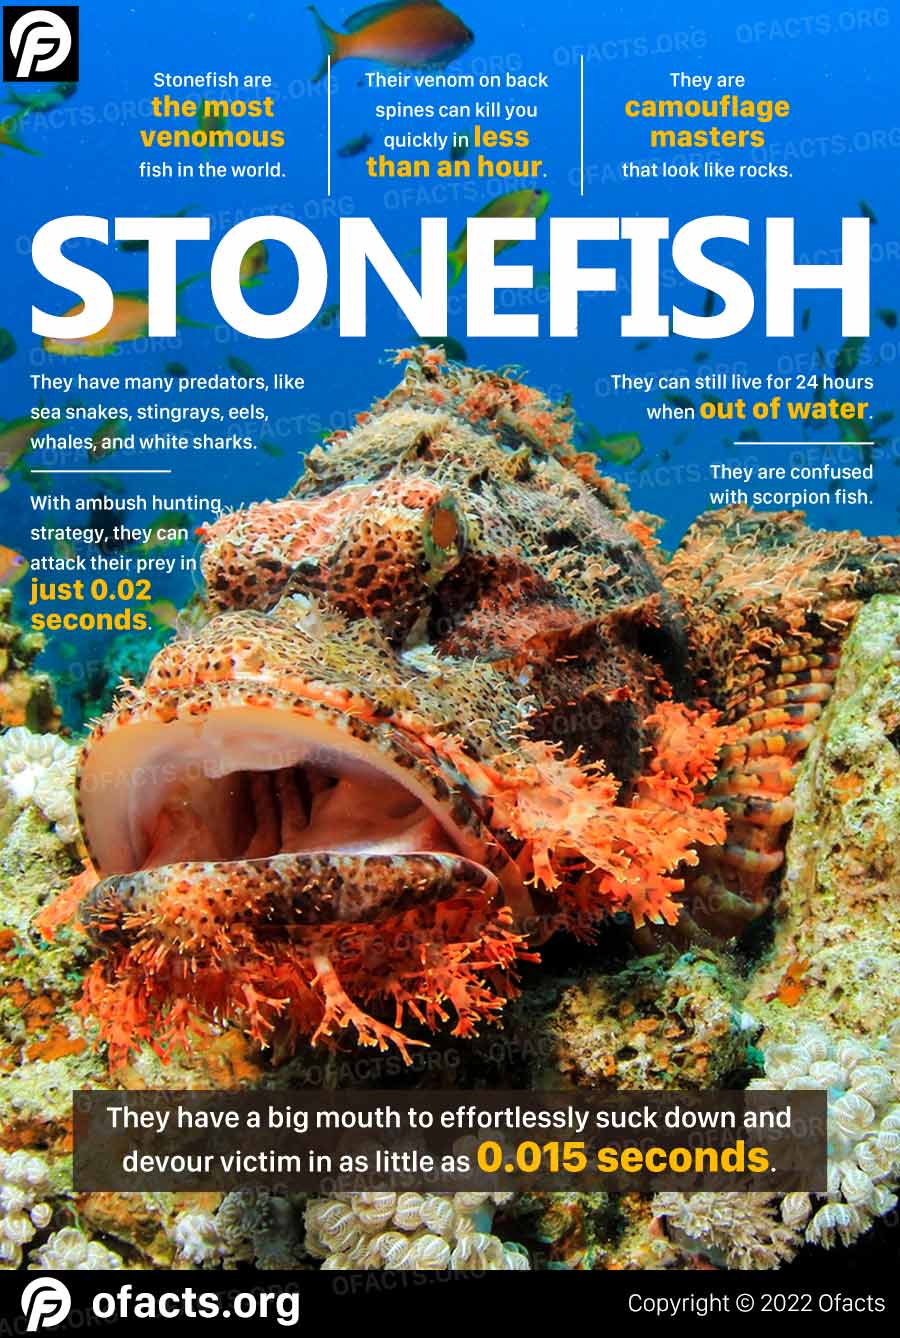 Stonefish facts